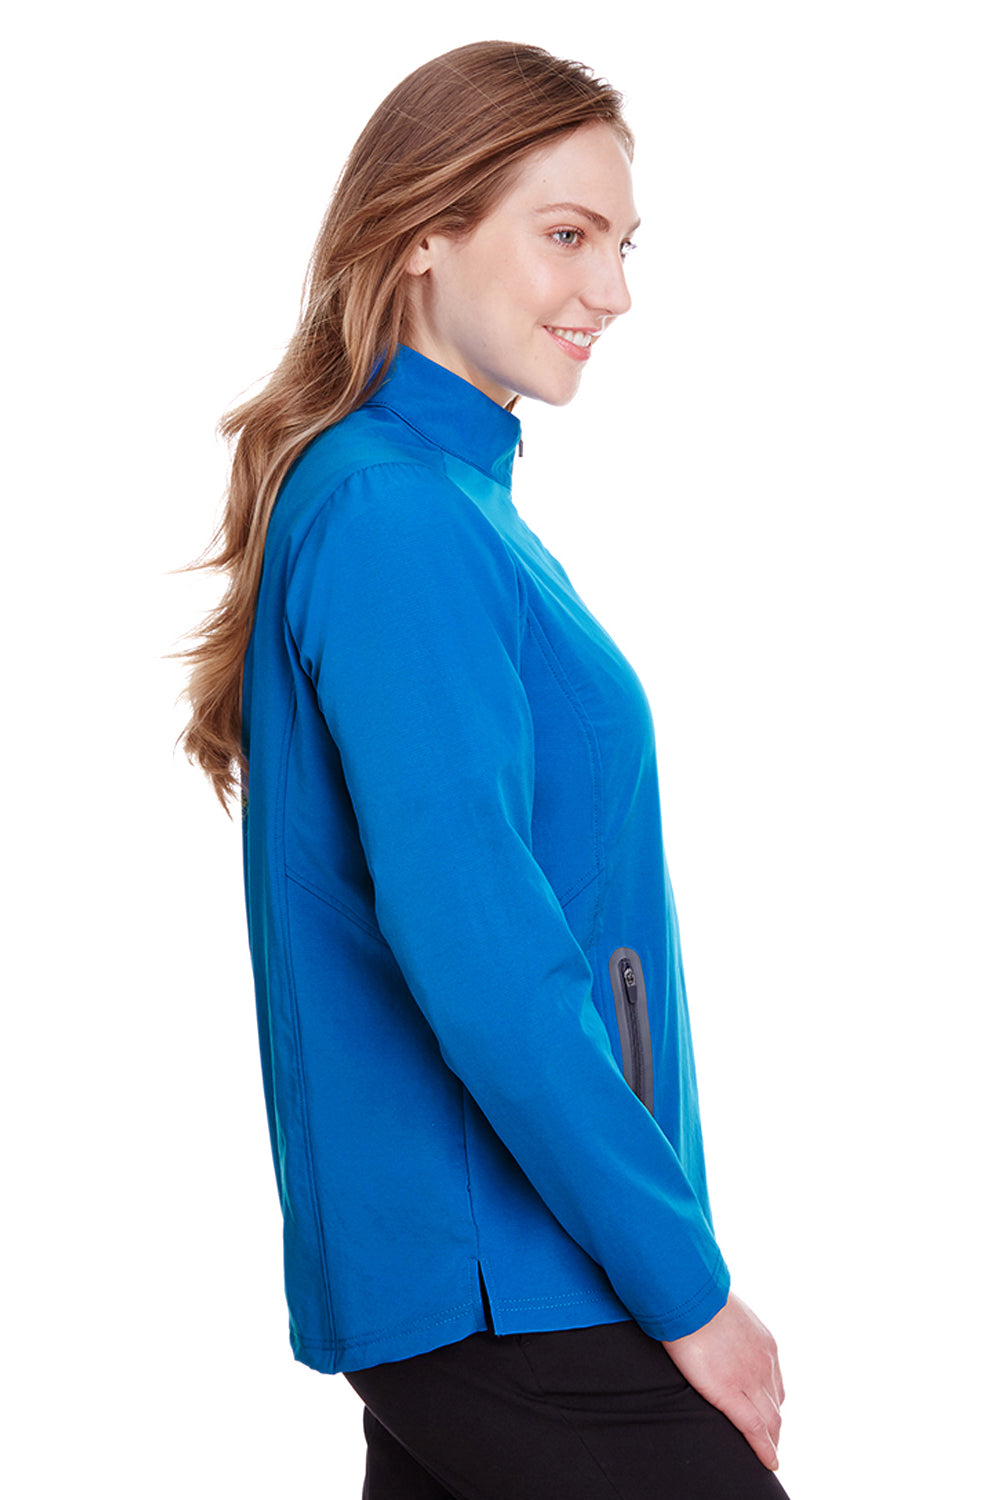 North End NE401W Womens Quest Performance Moisture Wicking 1/4 Zip Sweatshirt Olympic Blue/Carbon Grey Side